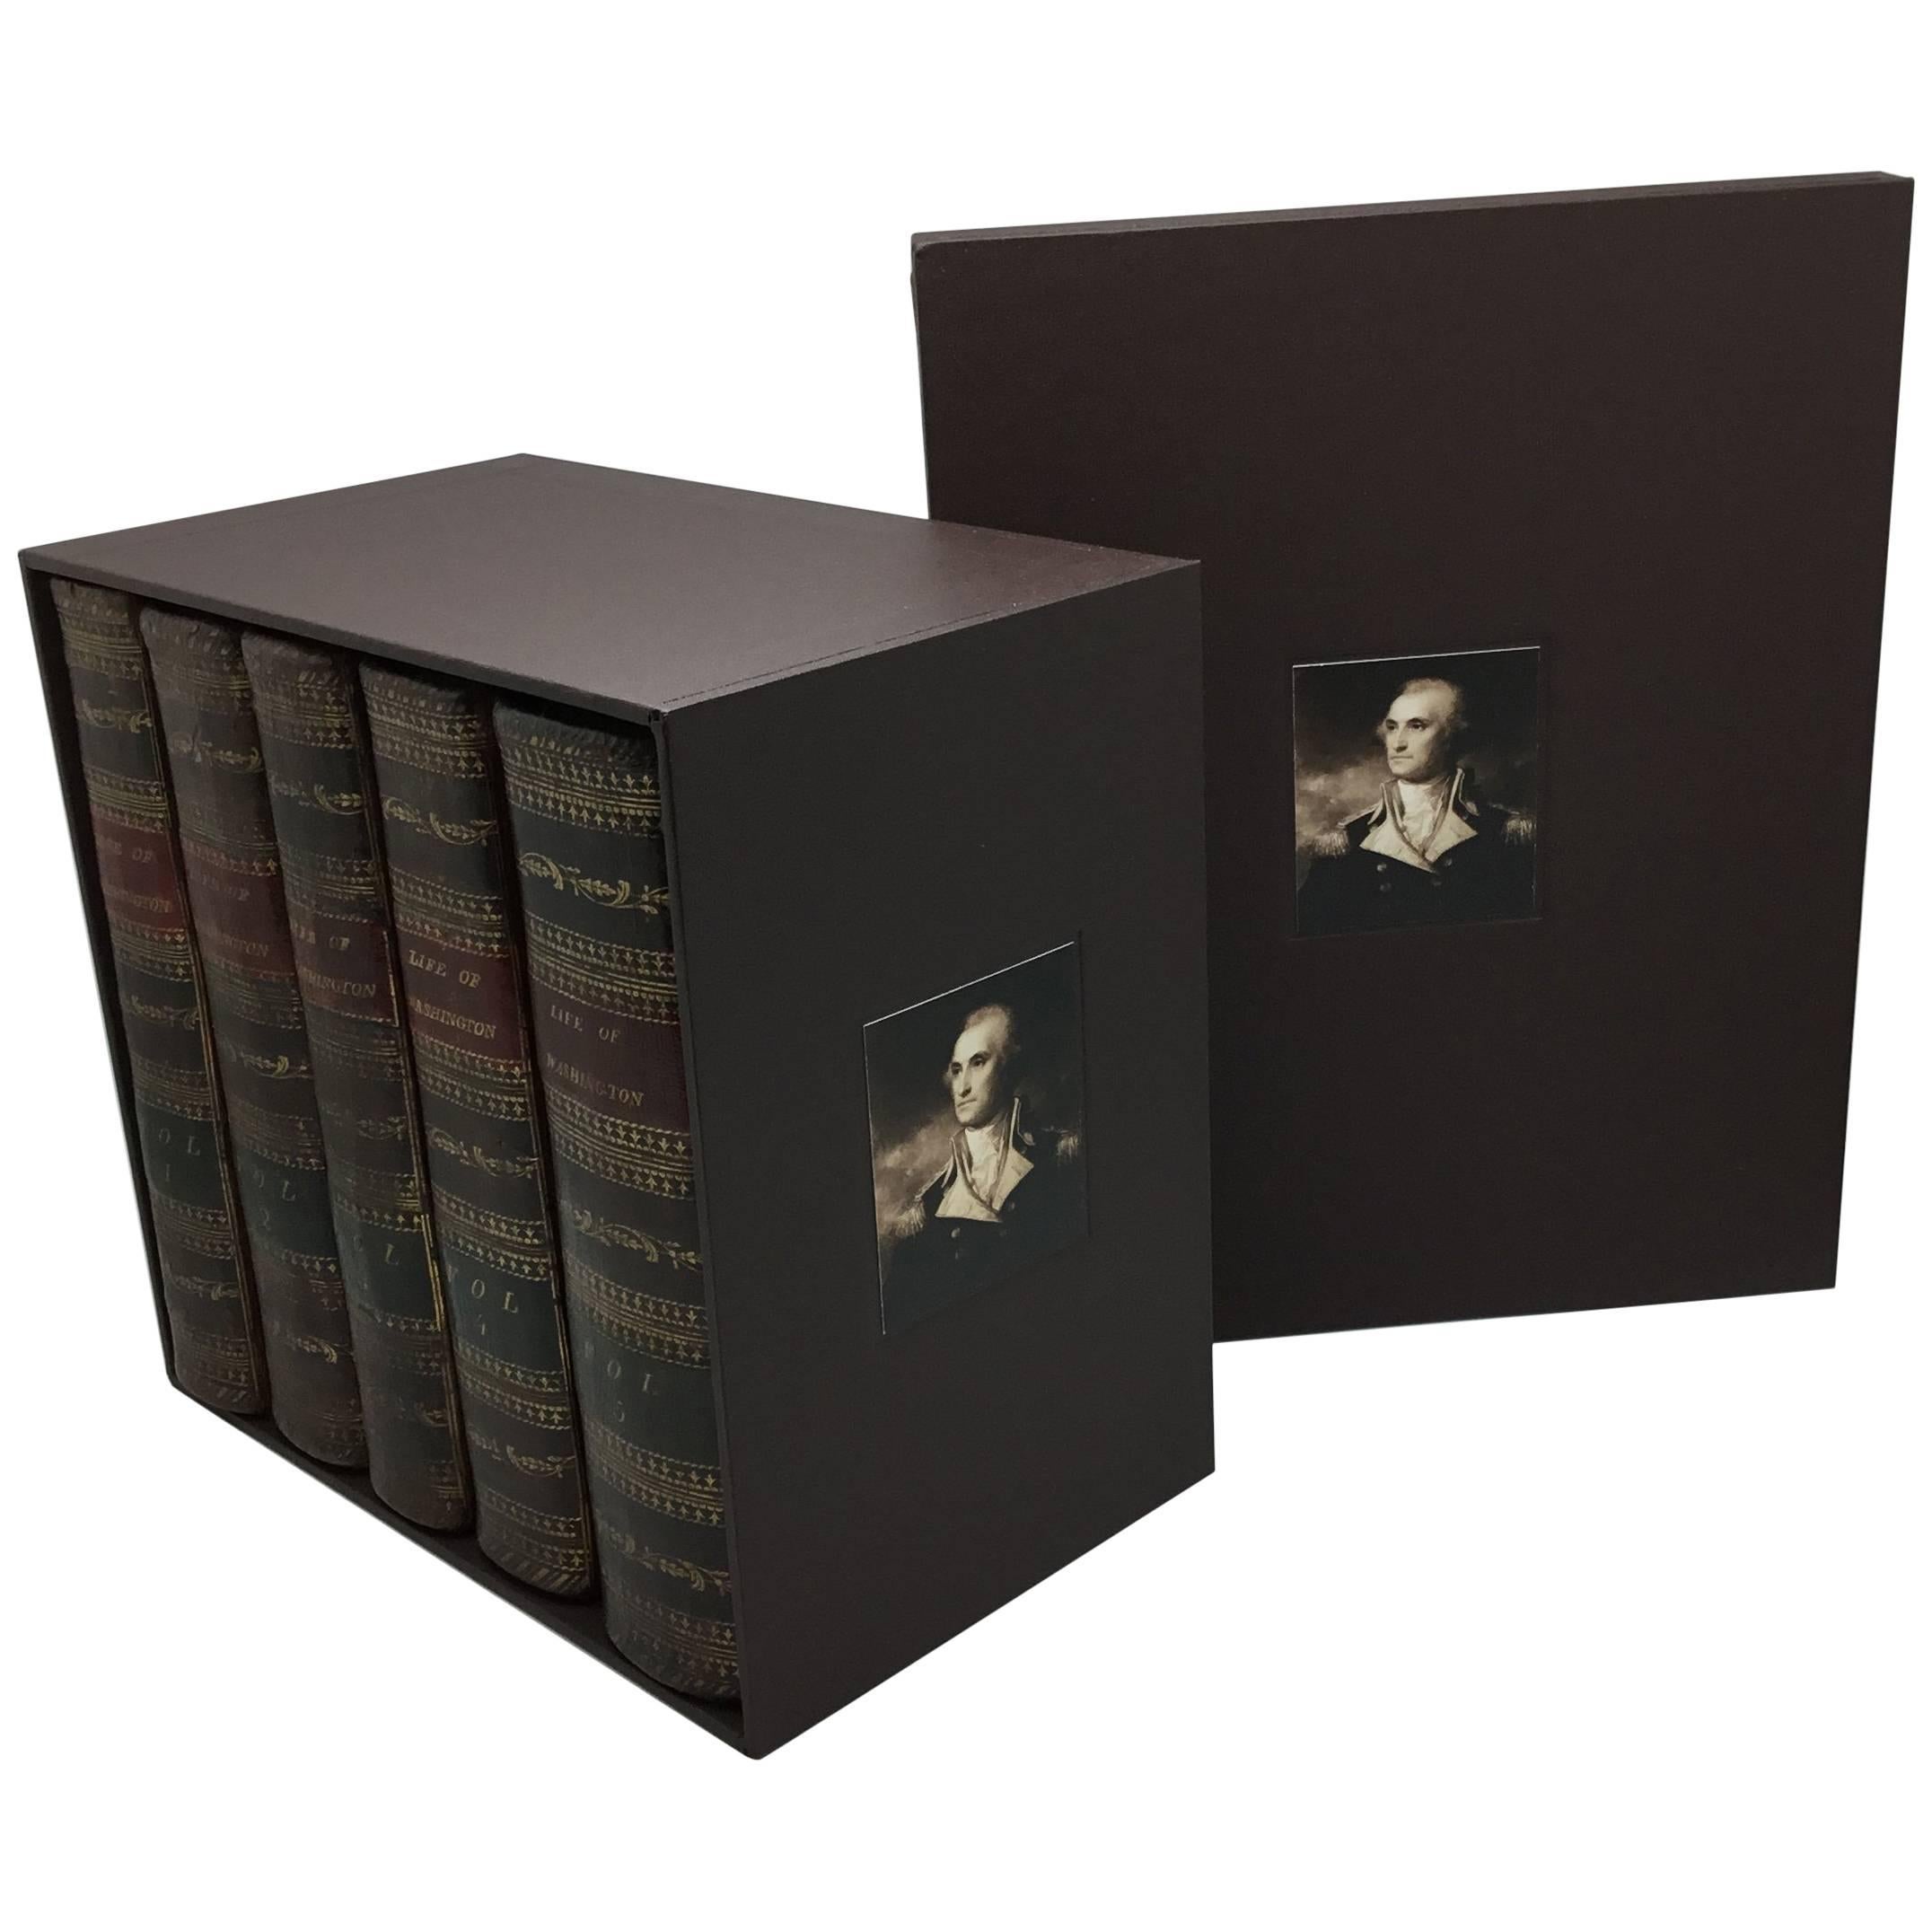 Life of George Washington by John Marshall, 6-Volumes with Atlas, Circa 1804-07 